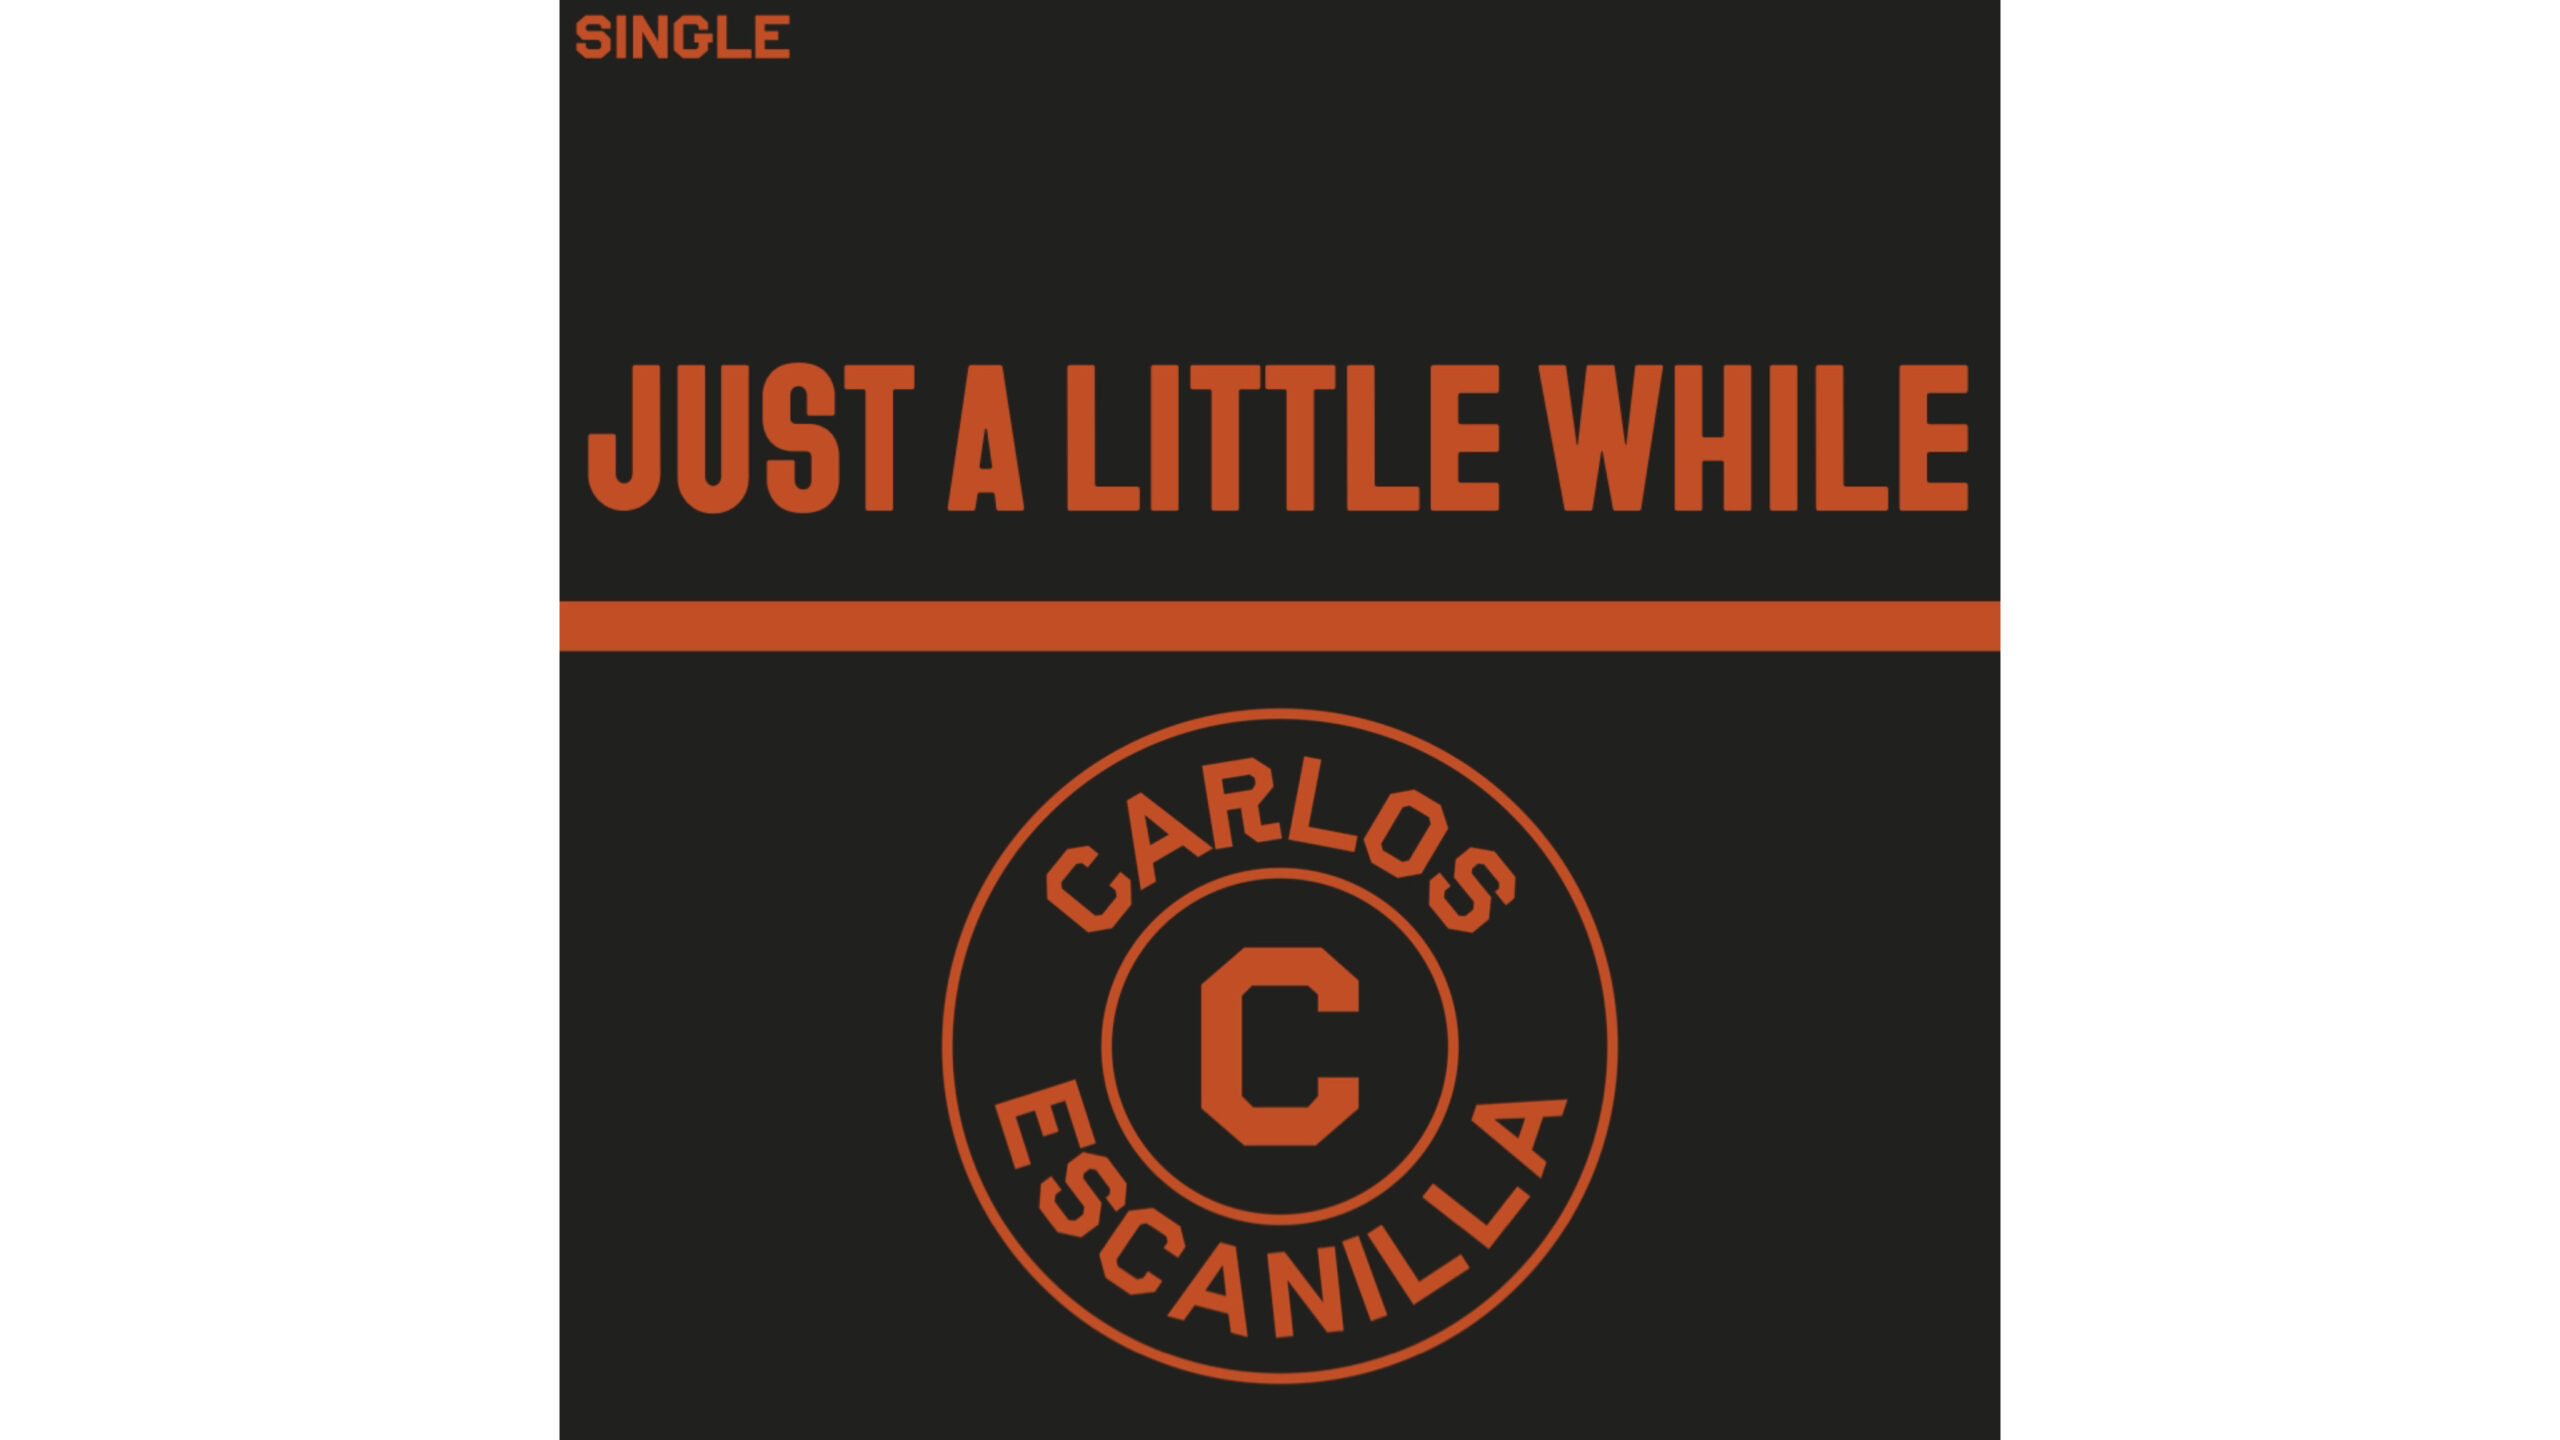 Carlos Escanilla – “Just A Little While”